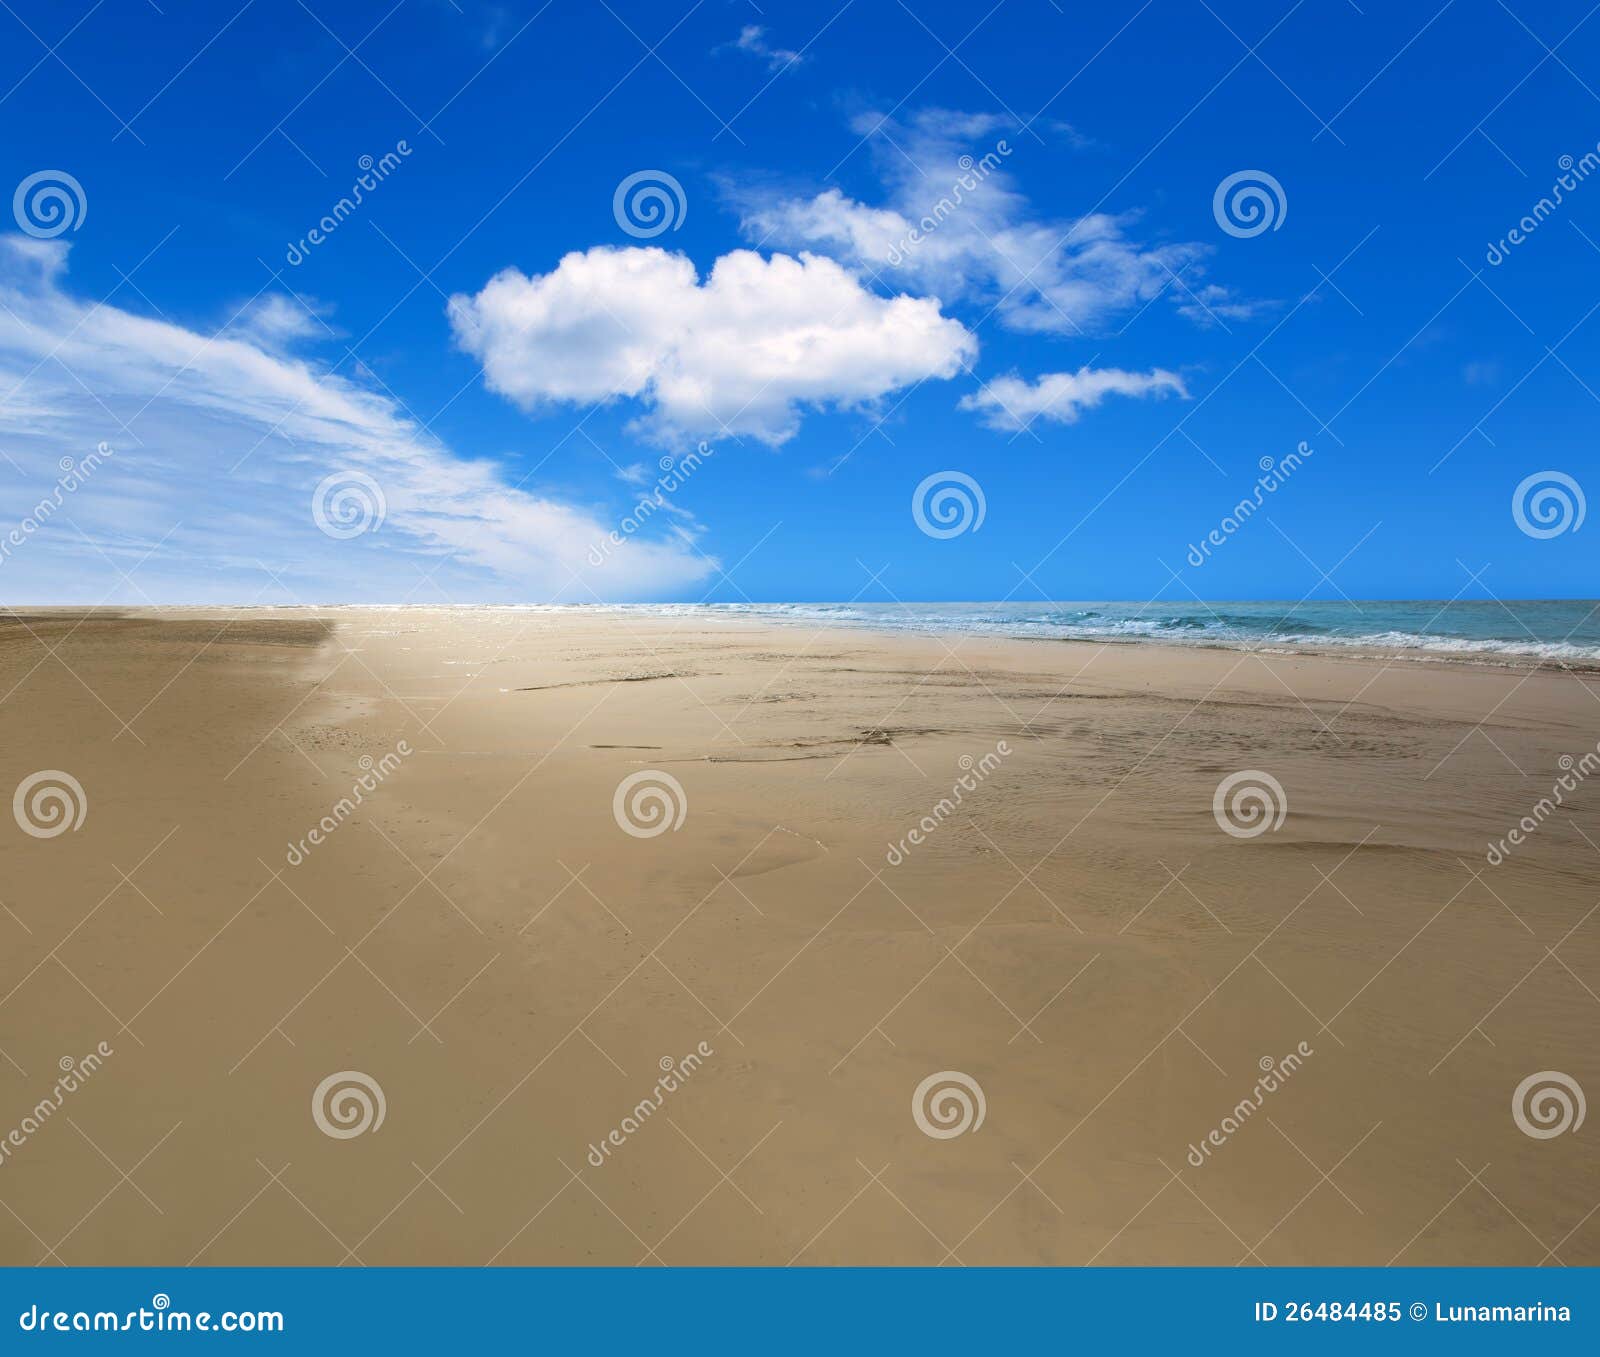 maspalomas playa del ingles beach in gran canaria